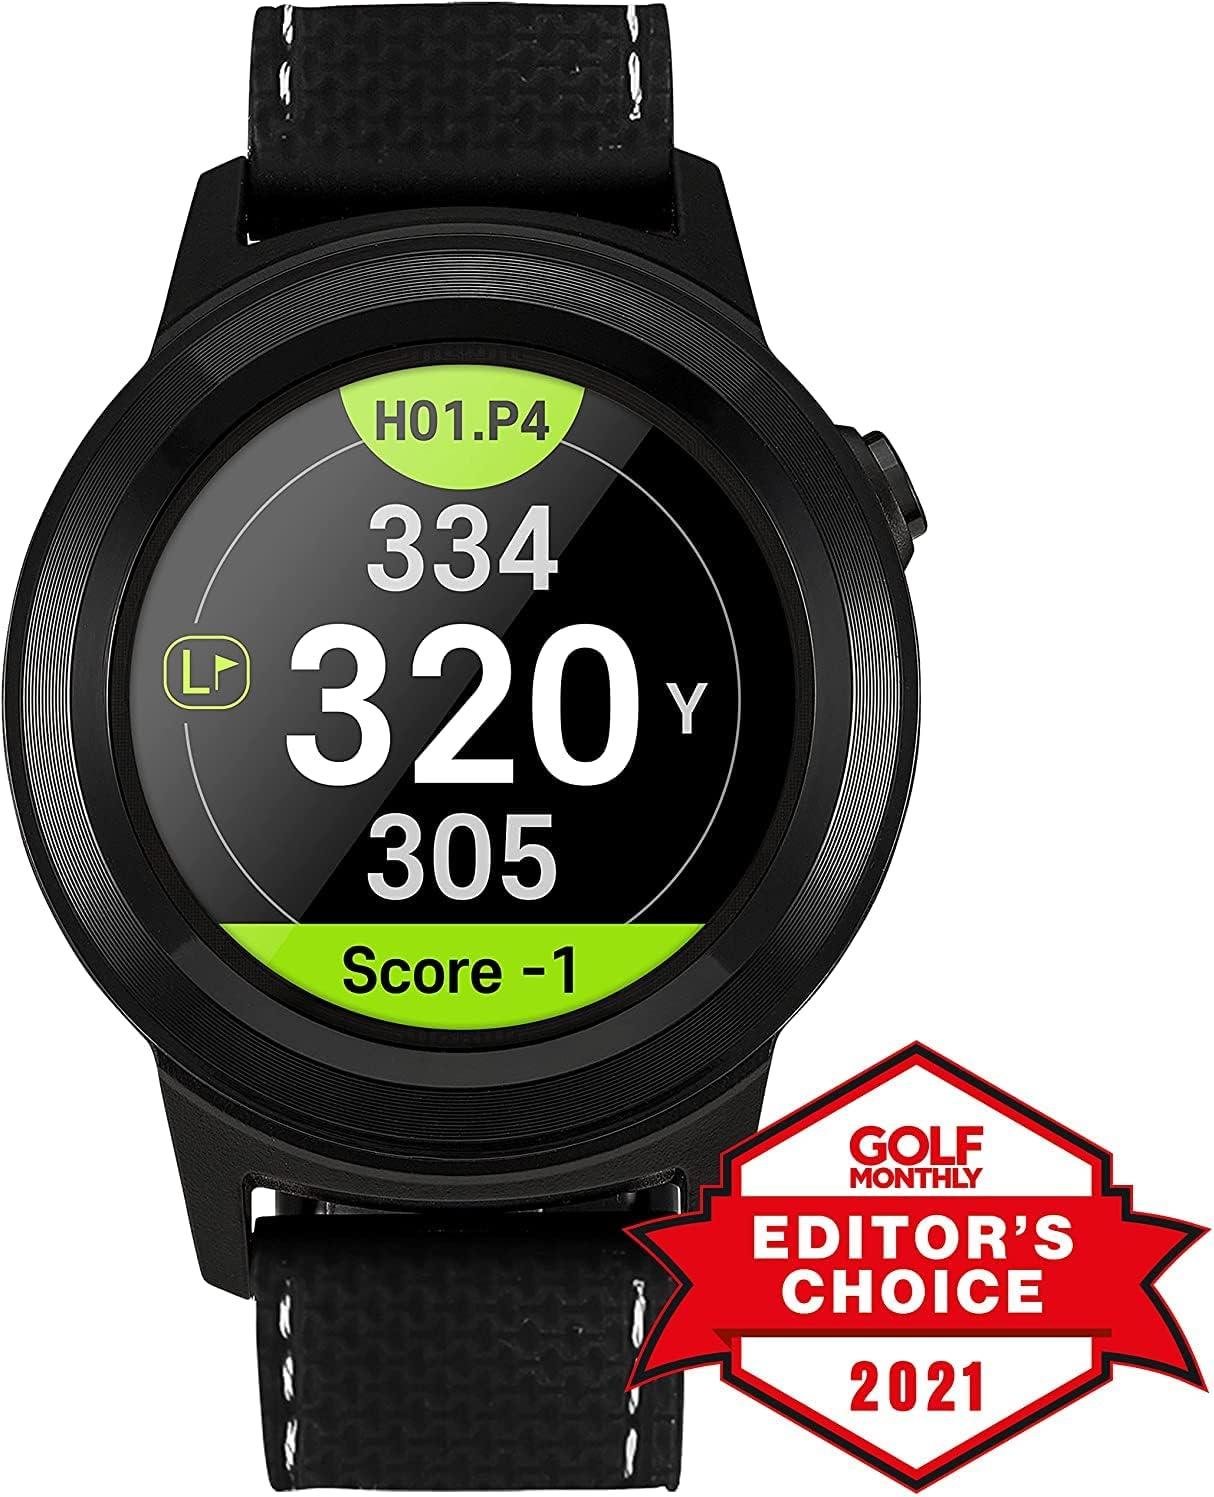 Golf Buddy Aim W11 Golf GPS Watch, Premium Full Color Touchscreen